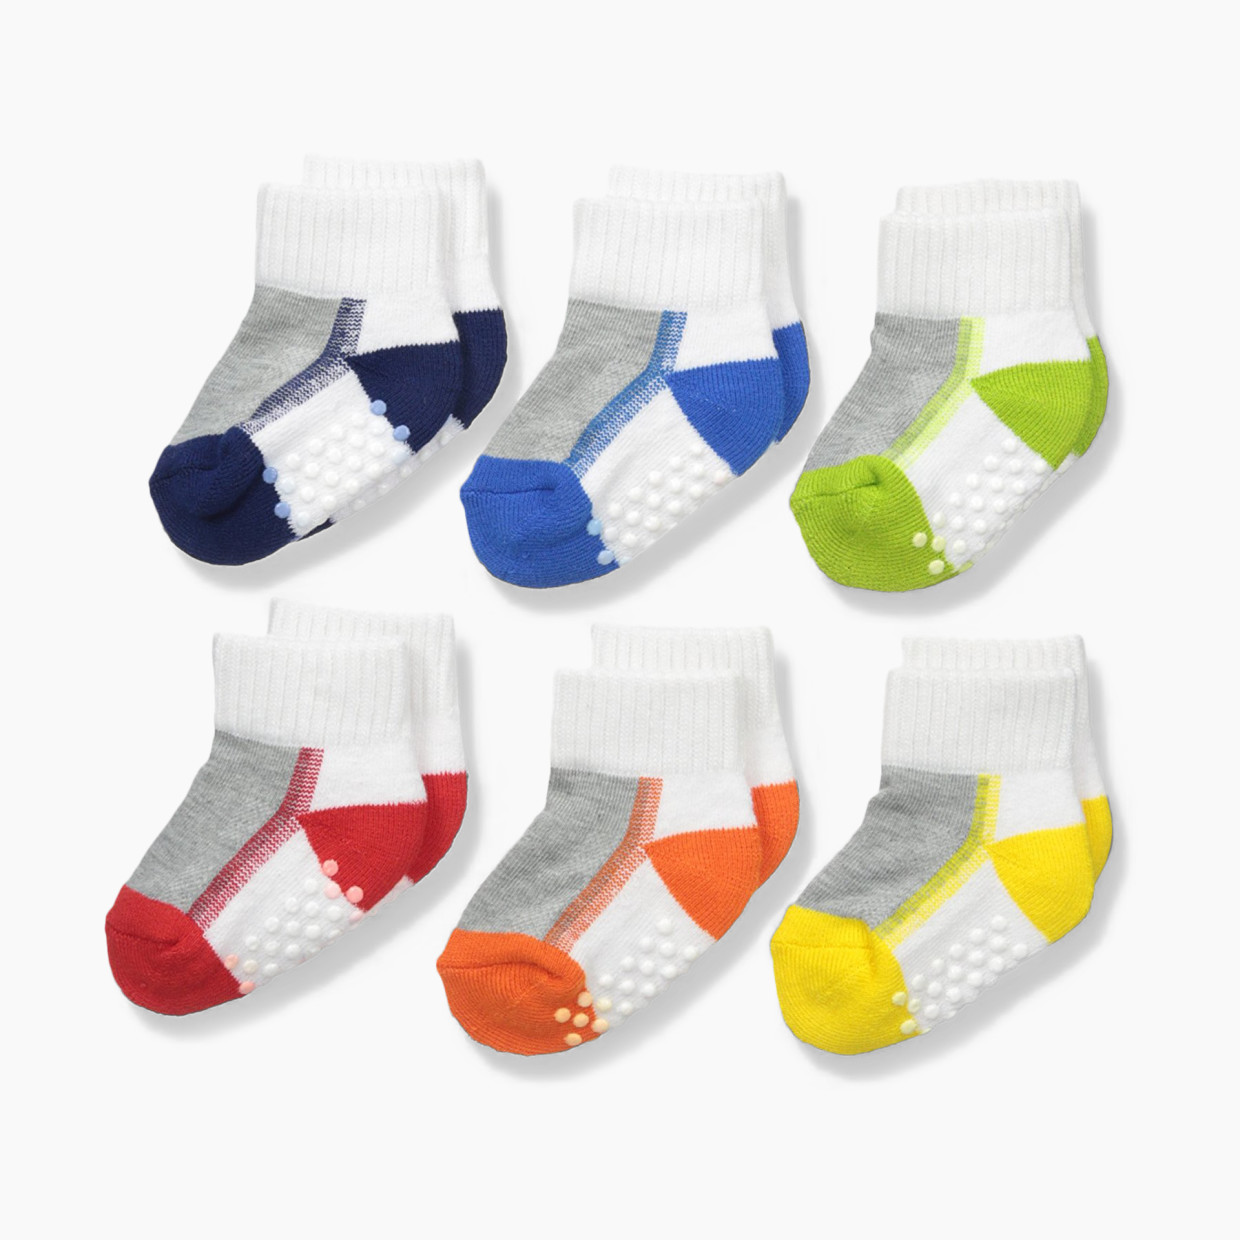 Jefferies Socks Performance Tech Quarter Socks (6 Pack) - Primary, 0-6 Months.